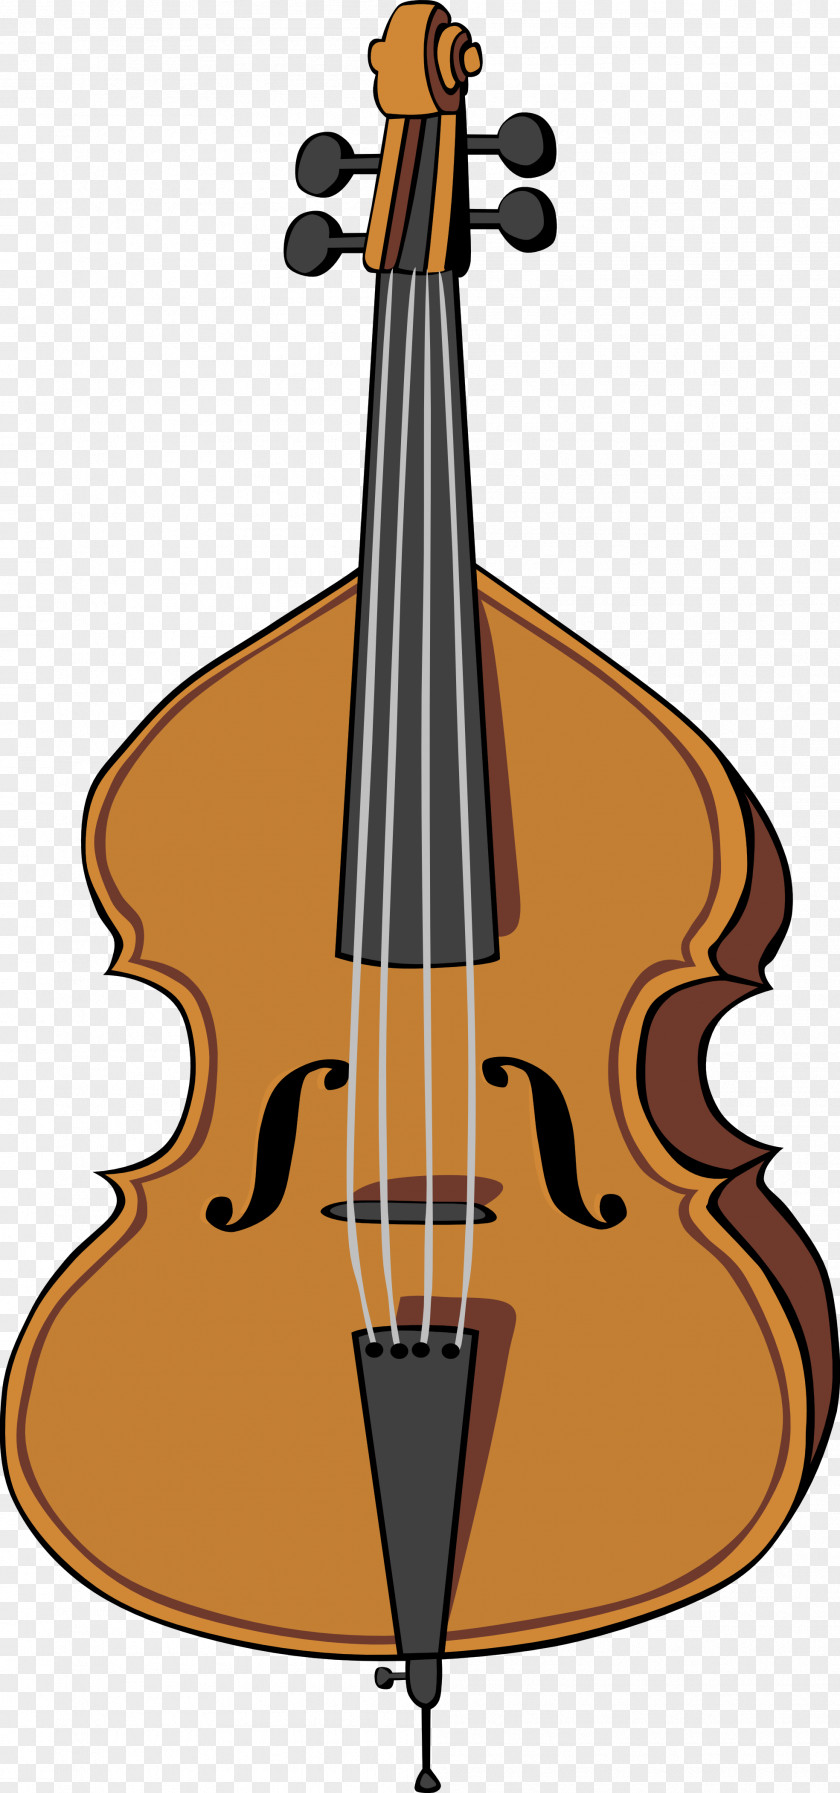 String Bass Cliparts Cello Violin Cellist Clip Art PNG